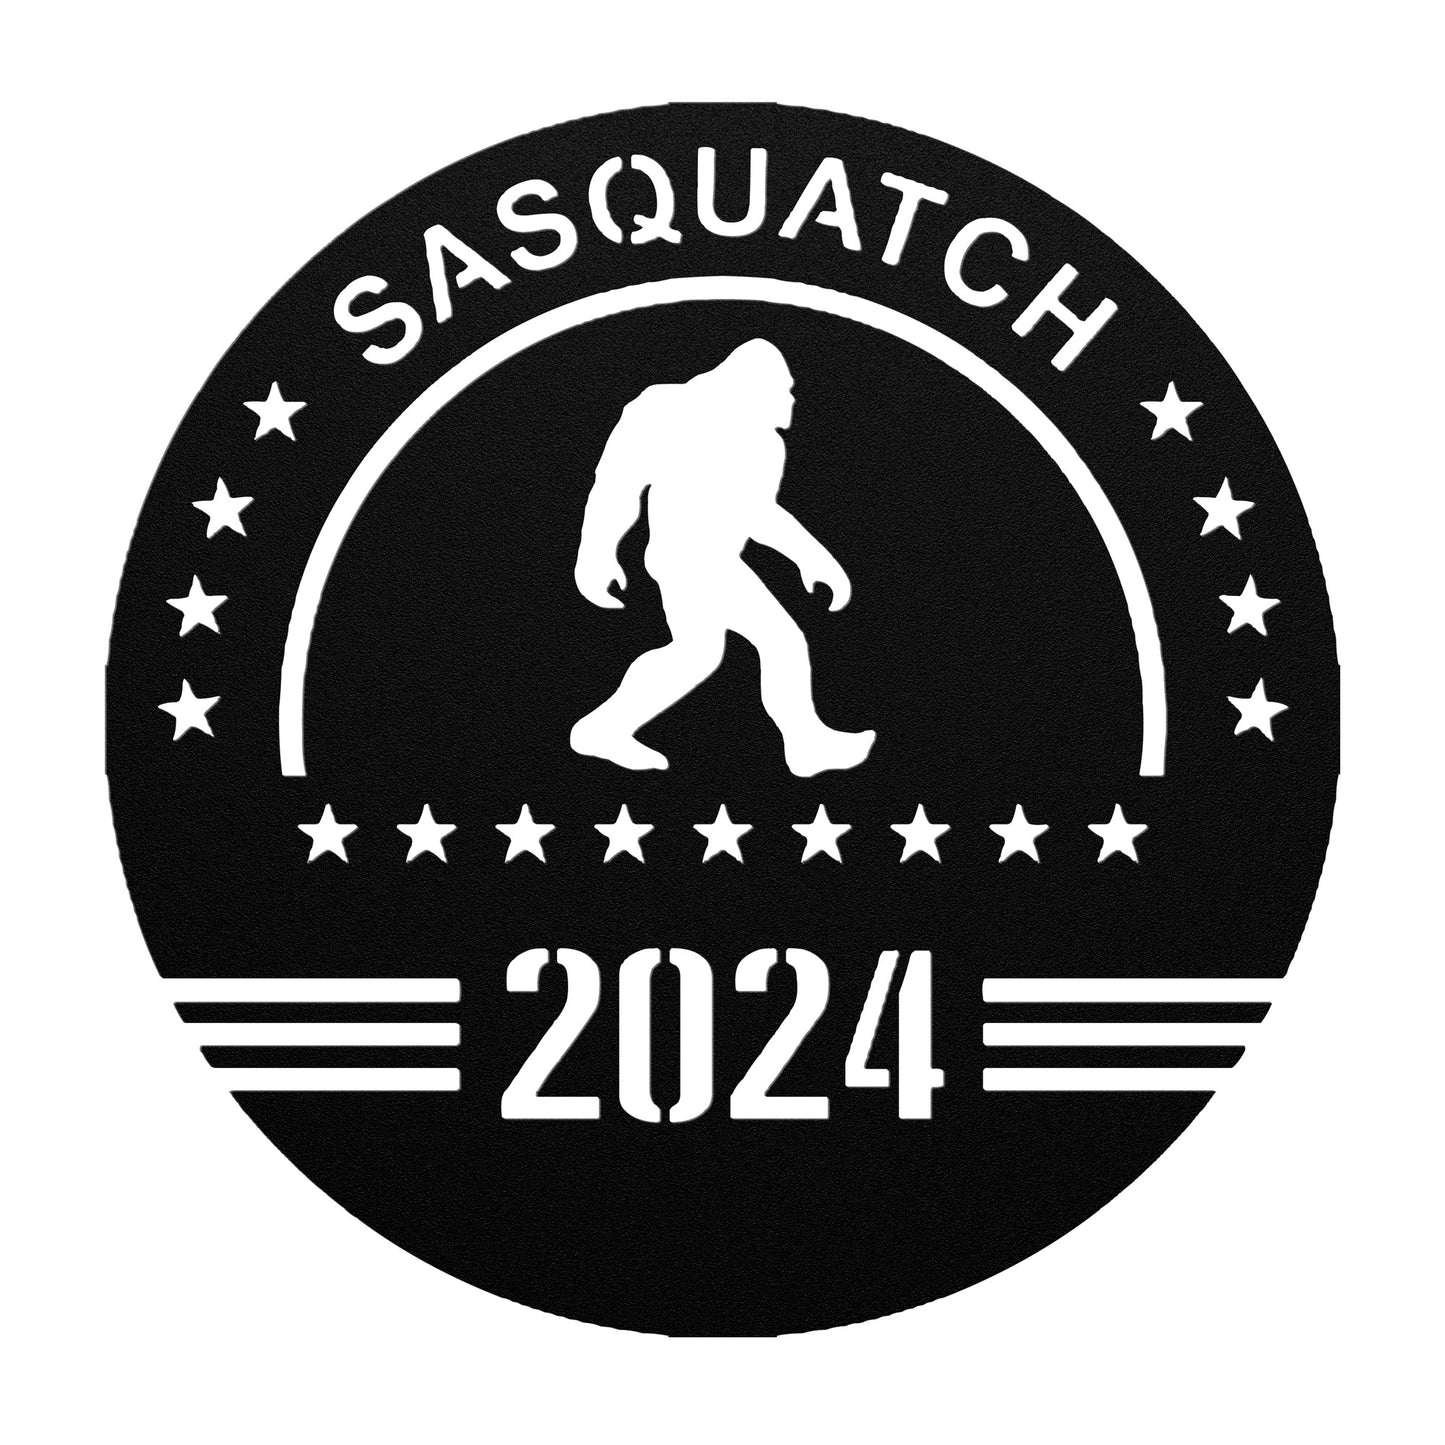 Sasquatch 2024 Metal Sign - Bigfoot for President - Funny Political Home Decor